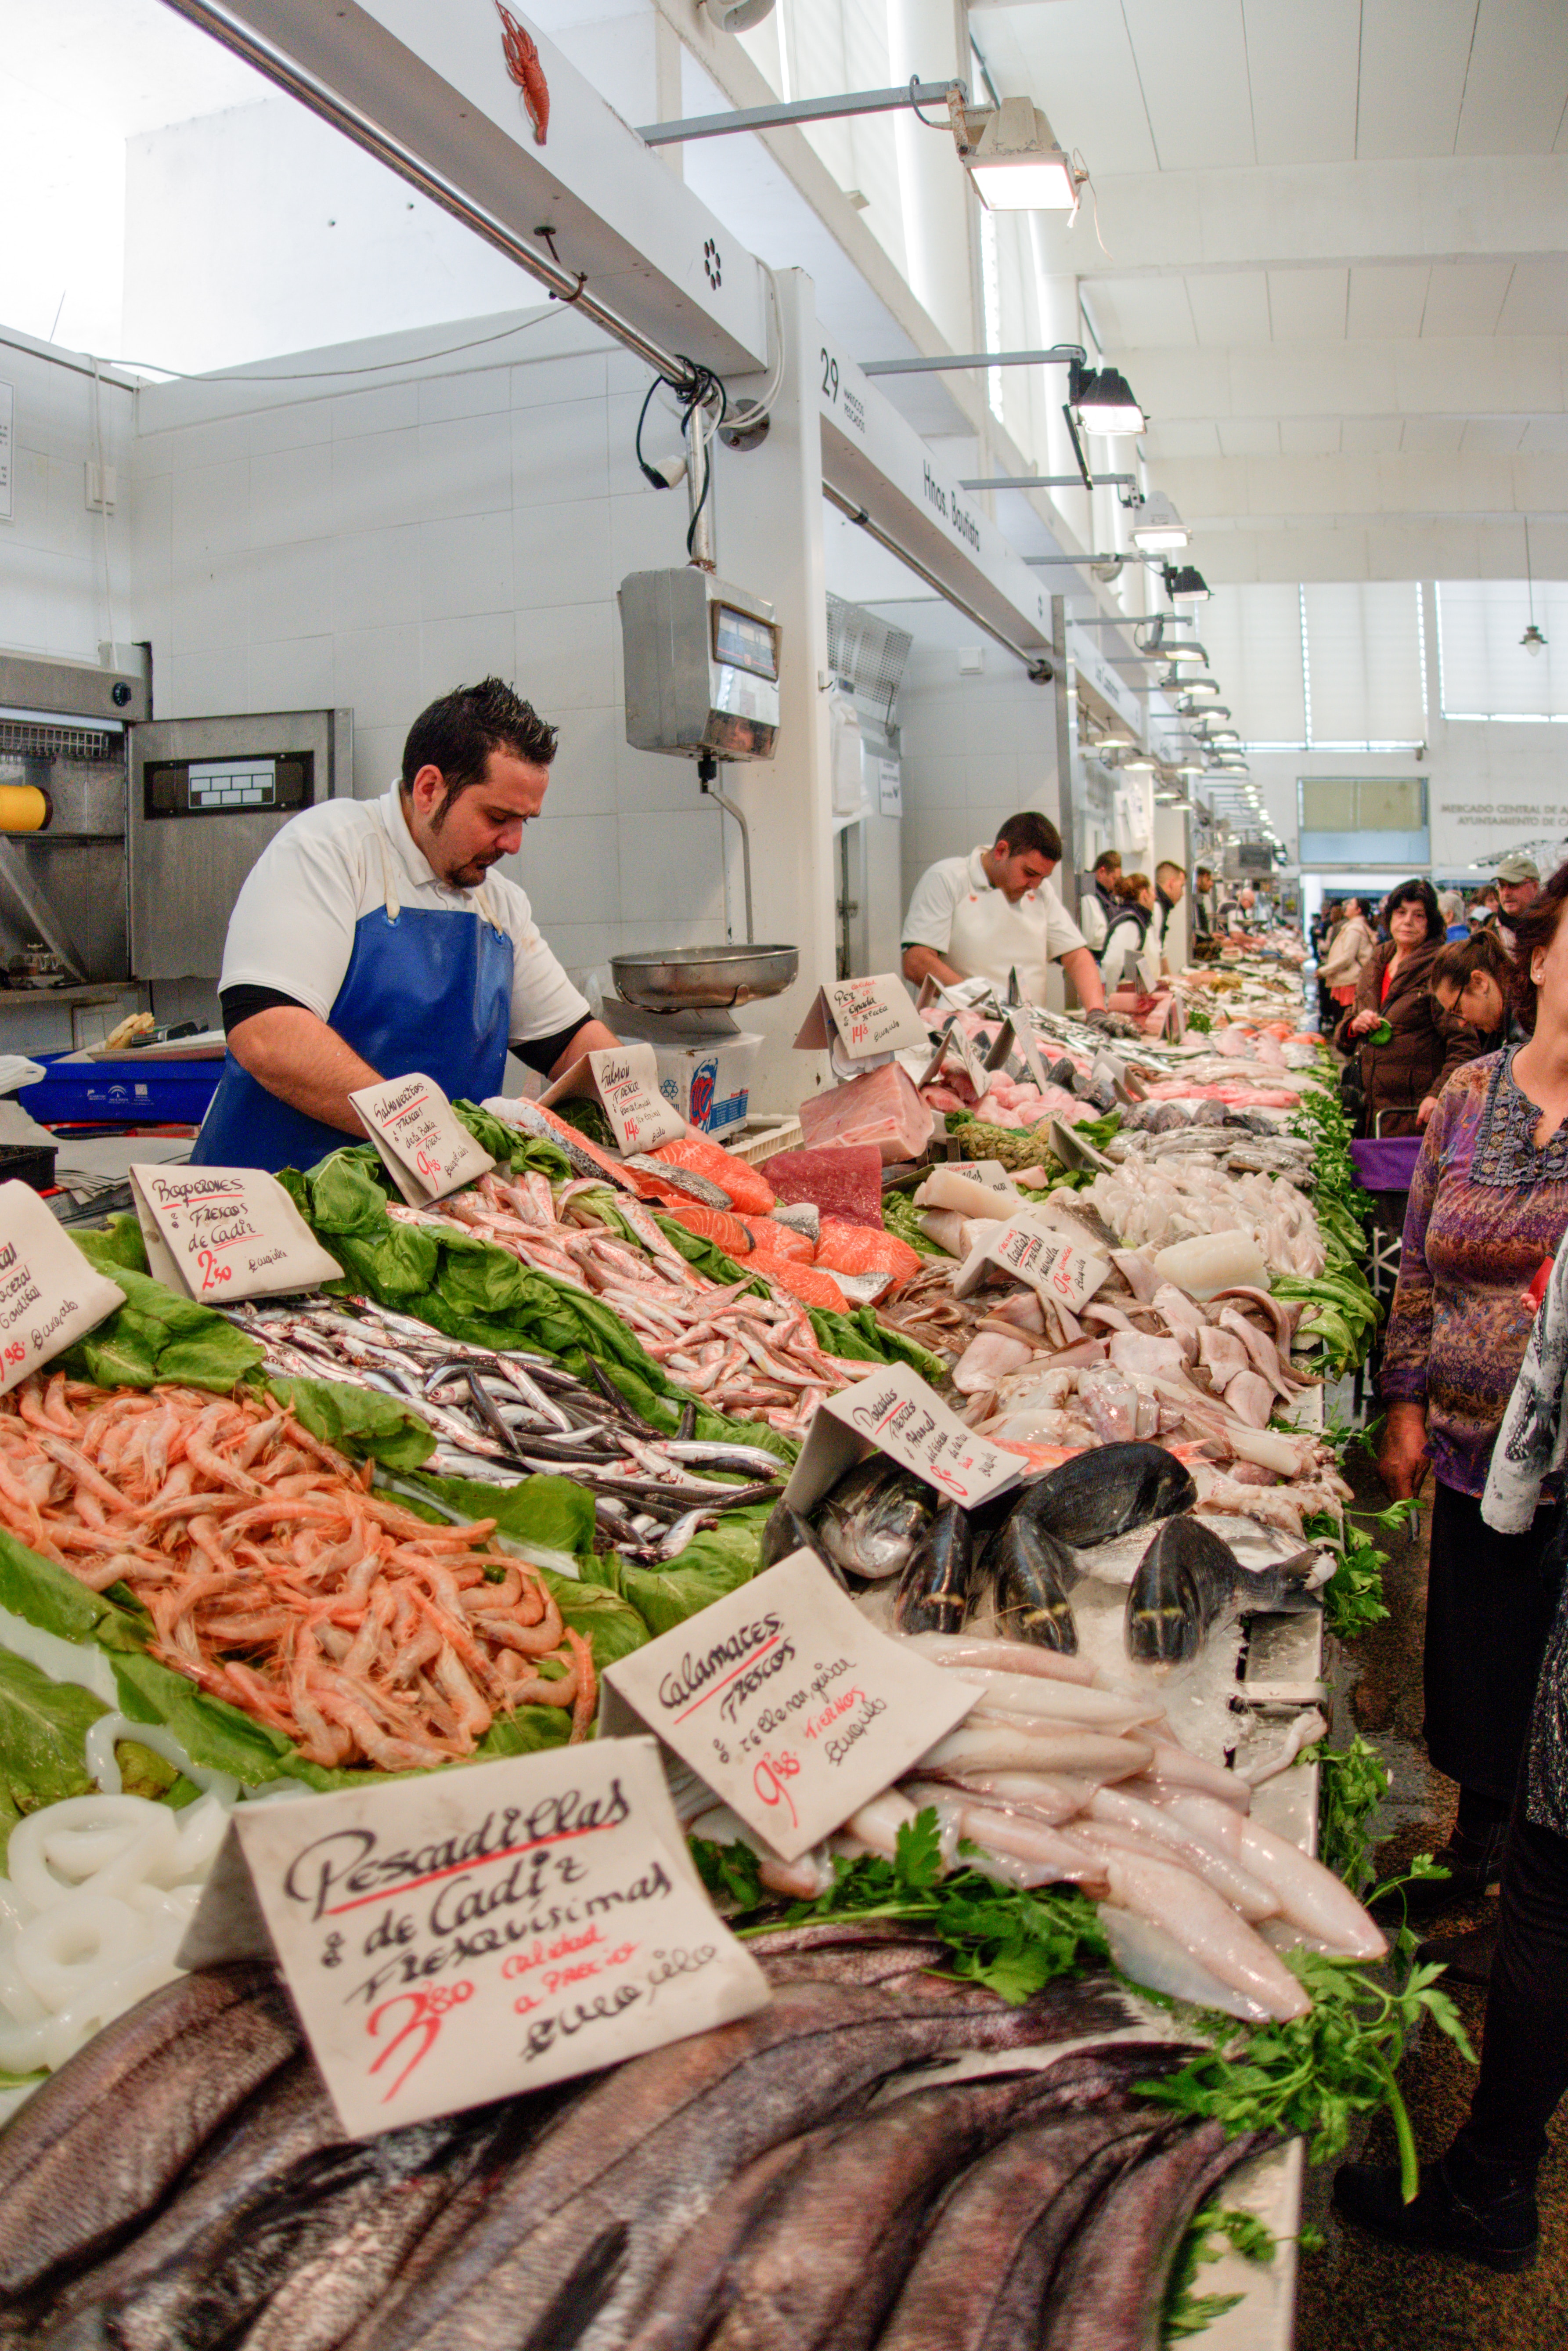 Fish market in Cadiz Spain